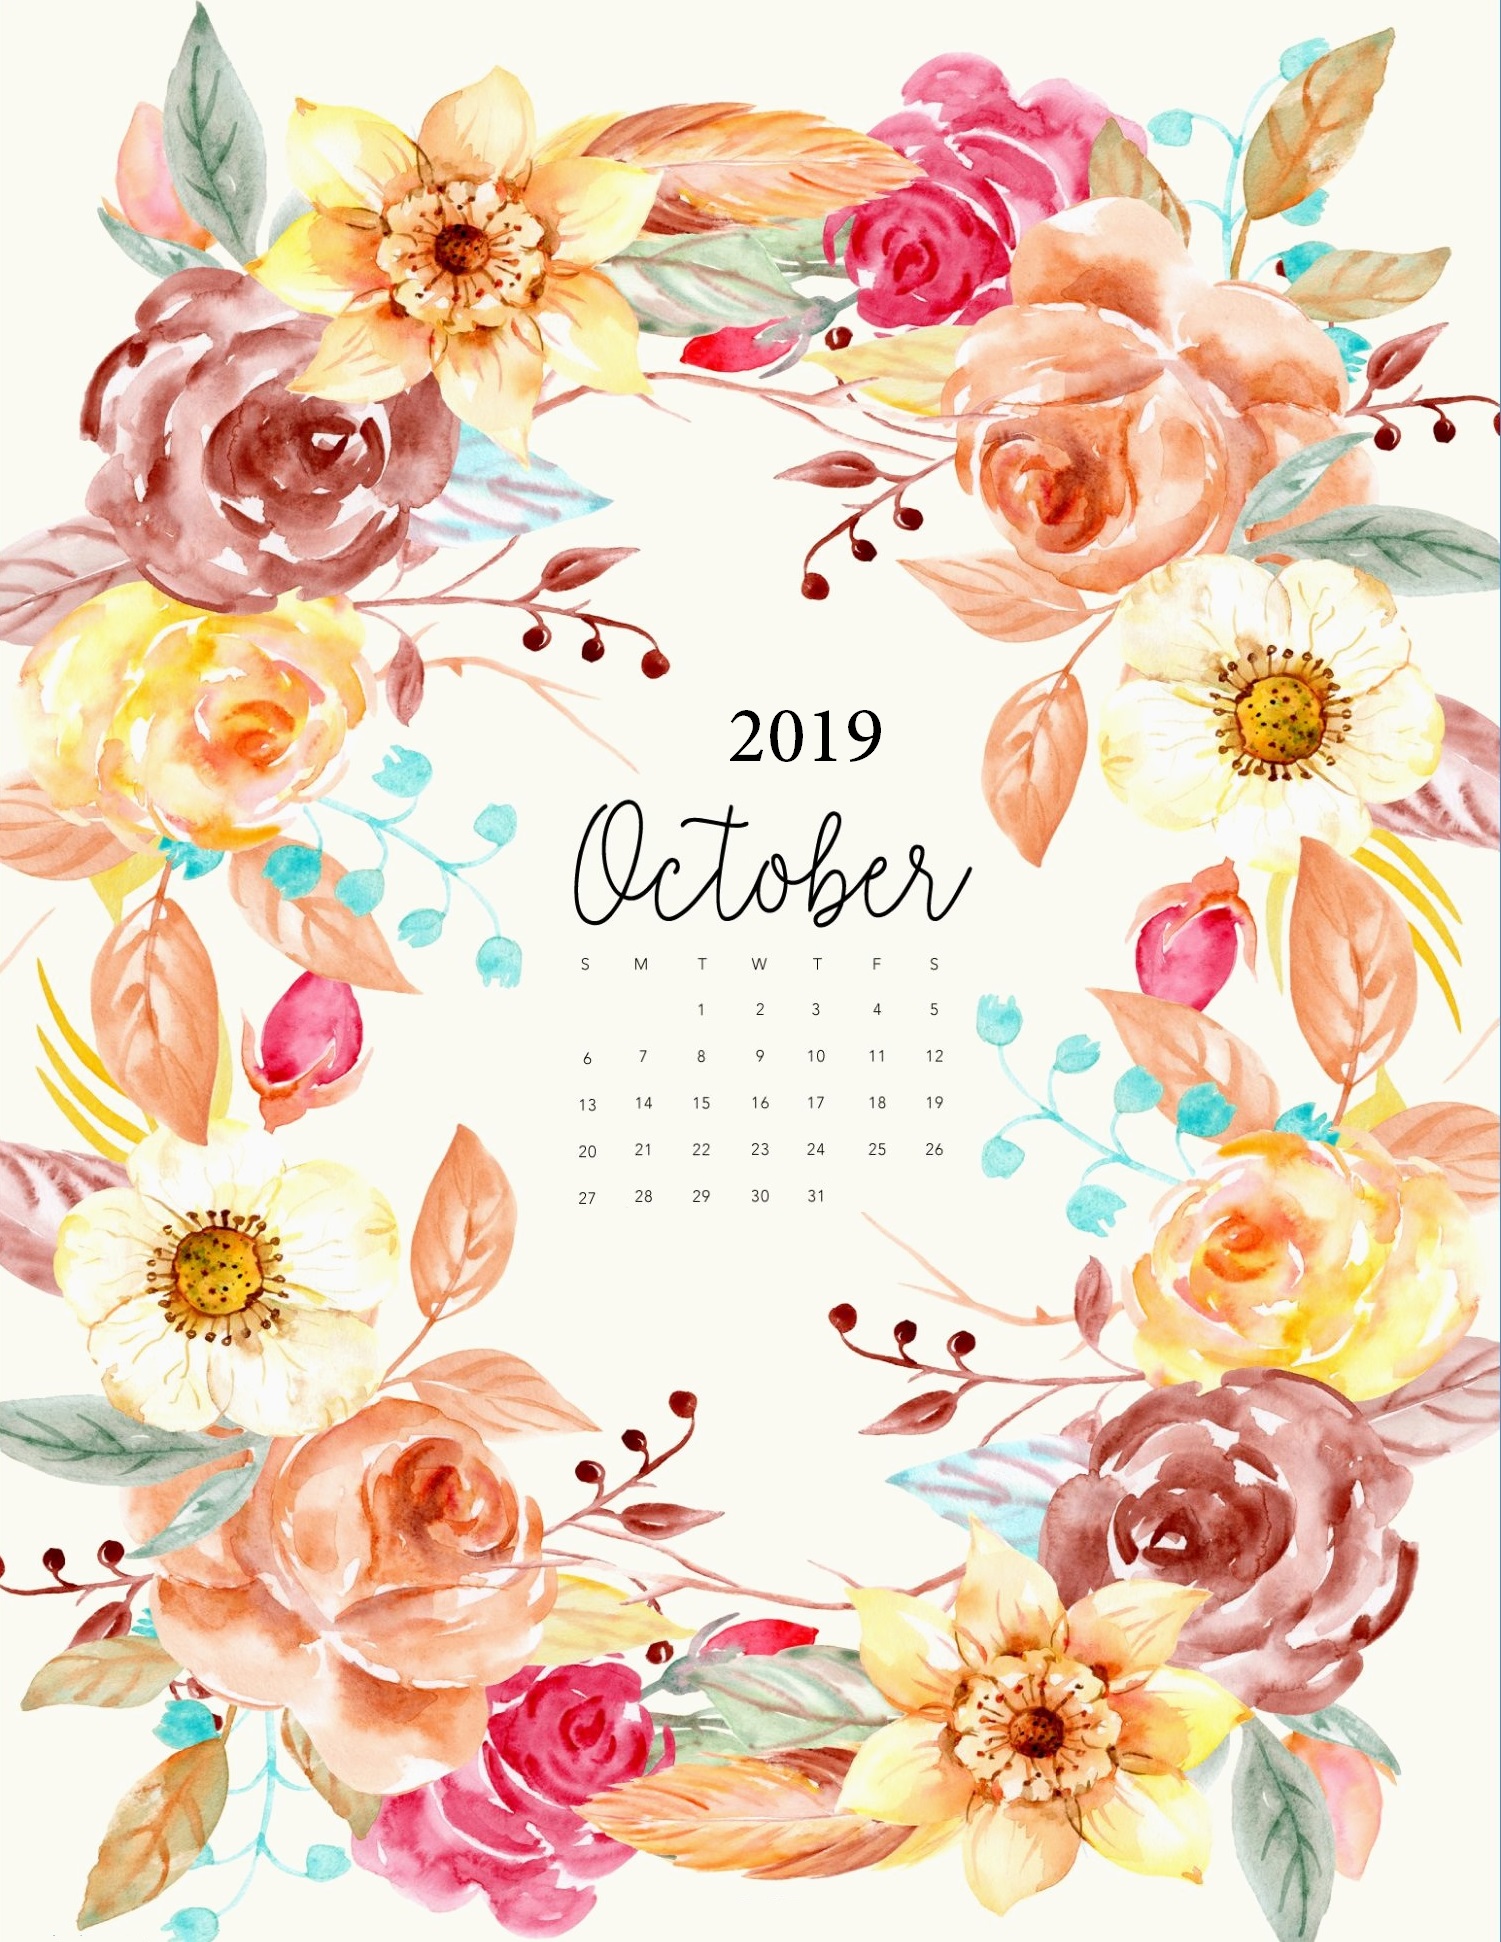 Best October 2019 iPhone Calendar Wallpaper